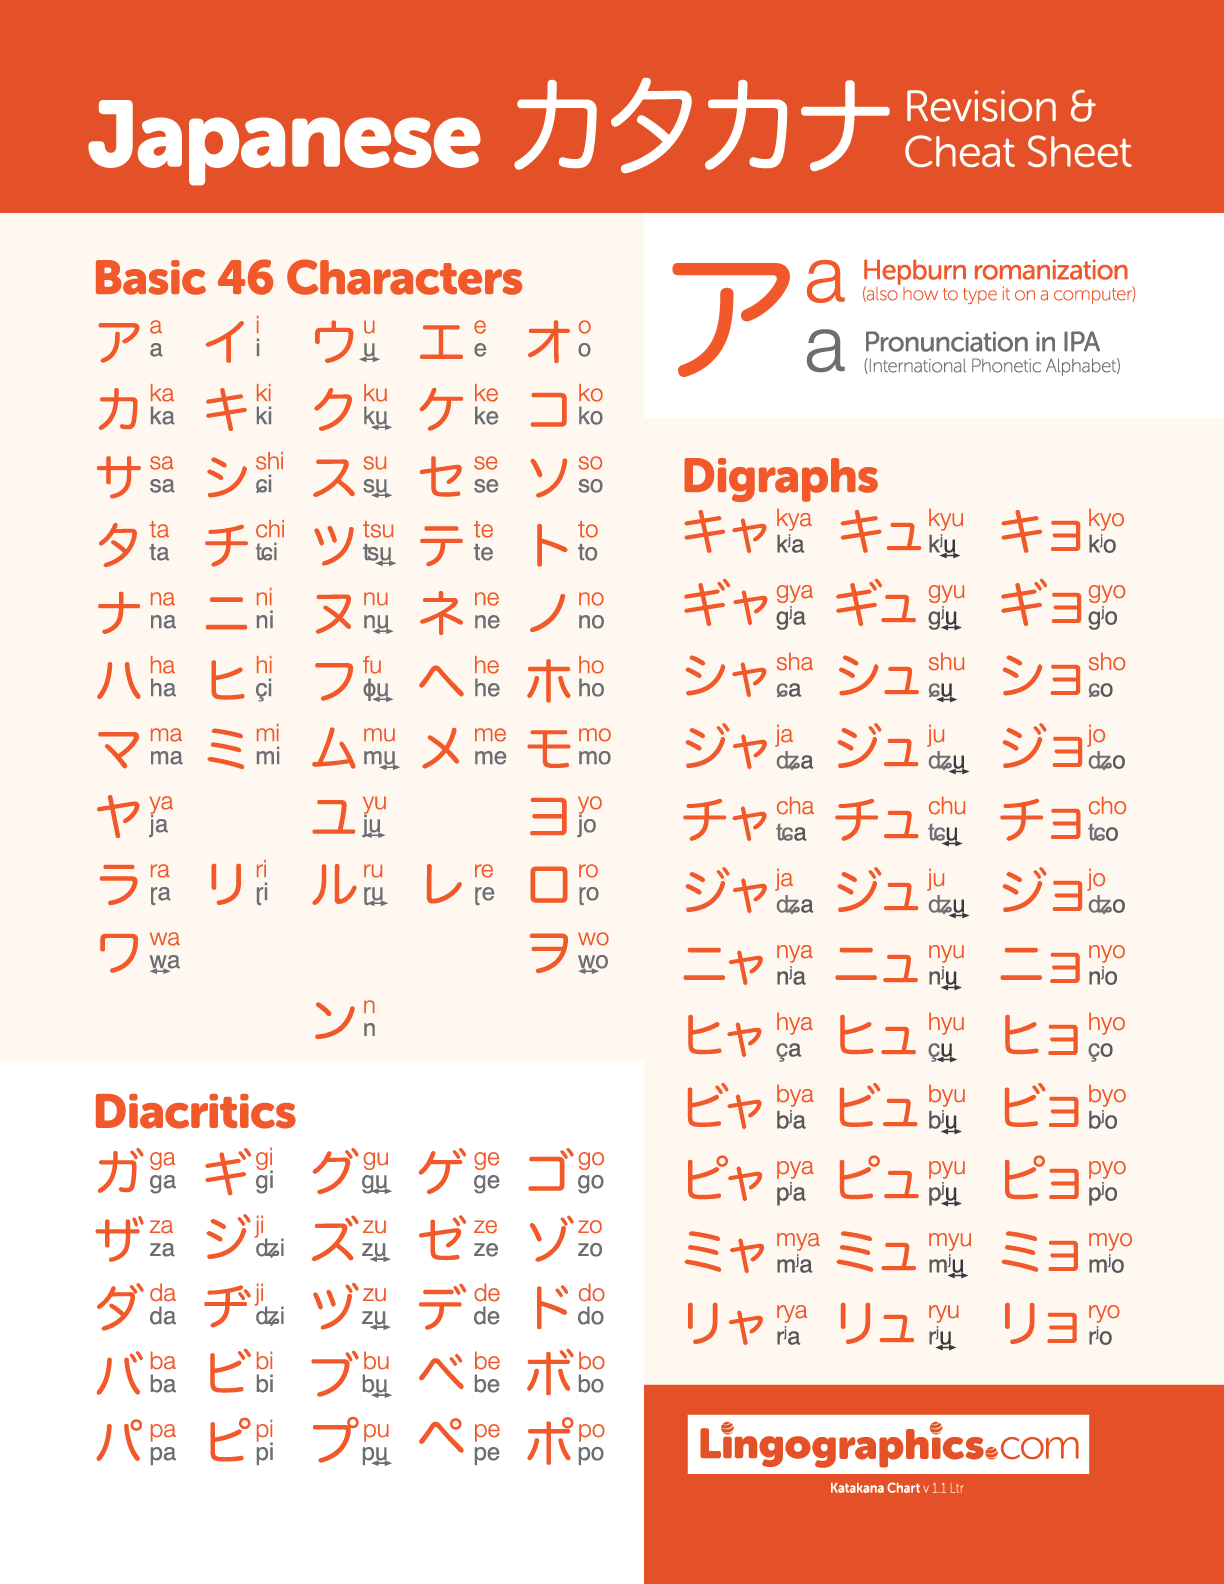 katakana table